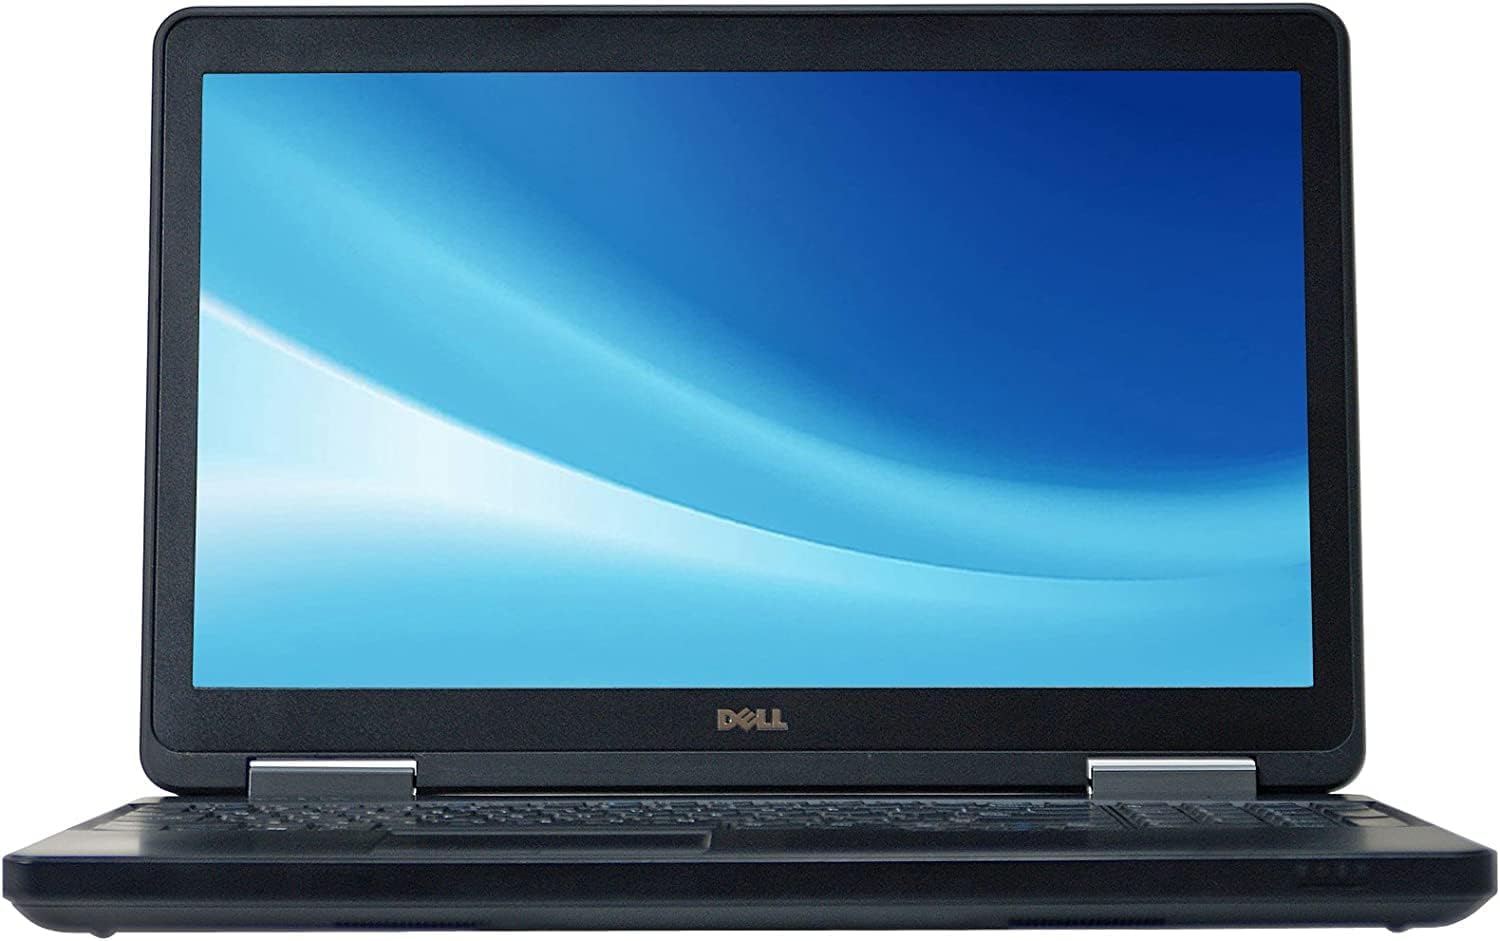 Refurbished Dell Latitude E5540 Laptop Computer, Intel Core i5, 8GB Ram, 256GB Solid State Drive, Windows 10 Operating System